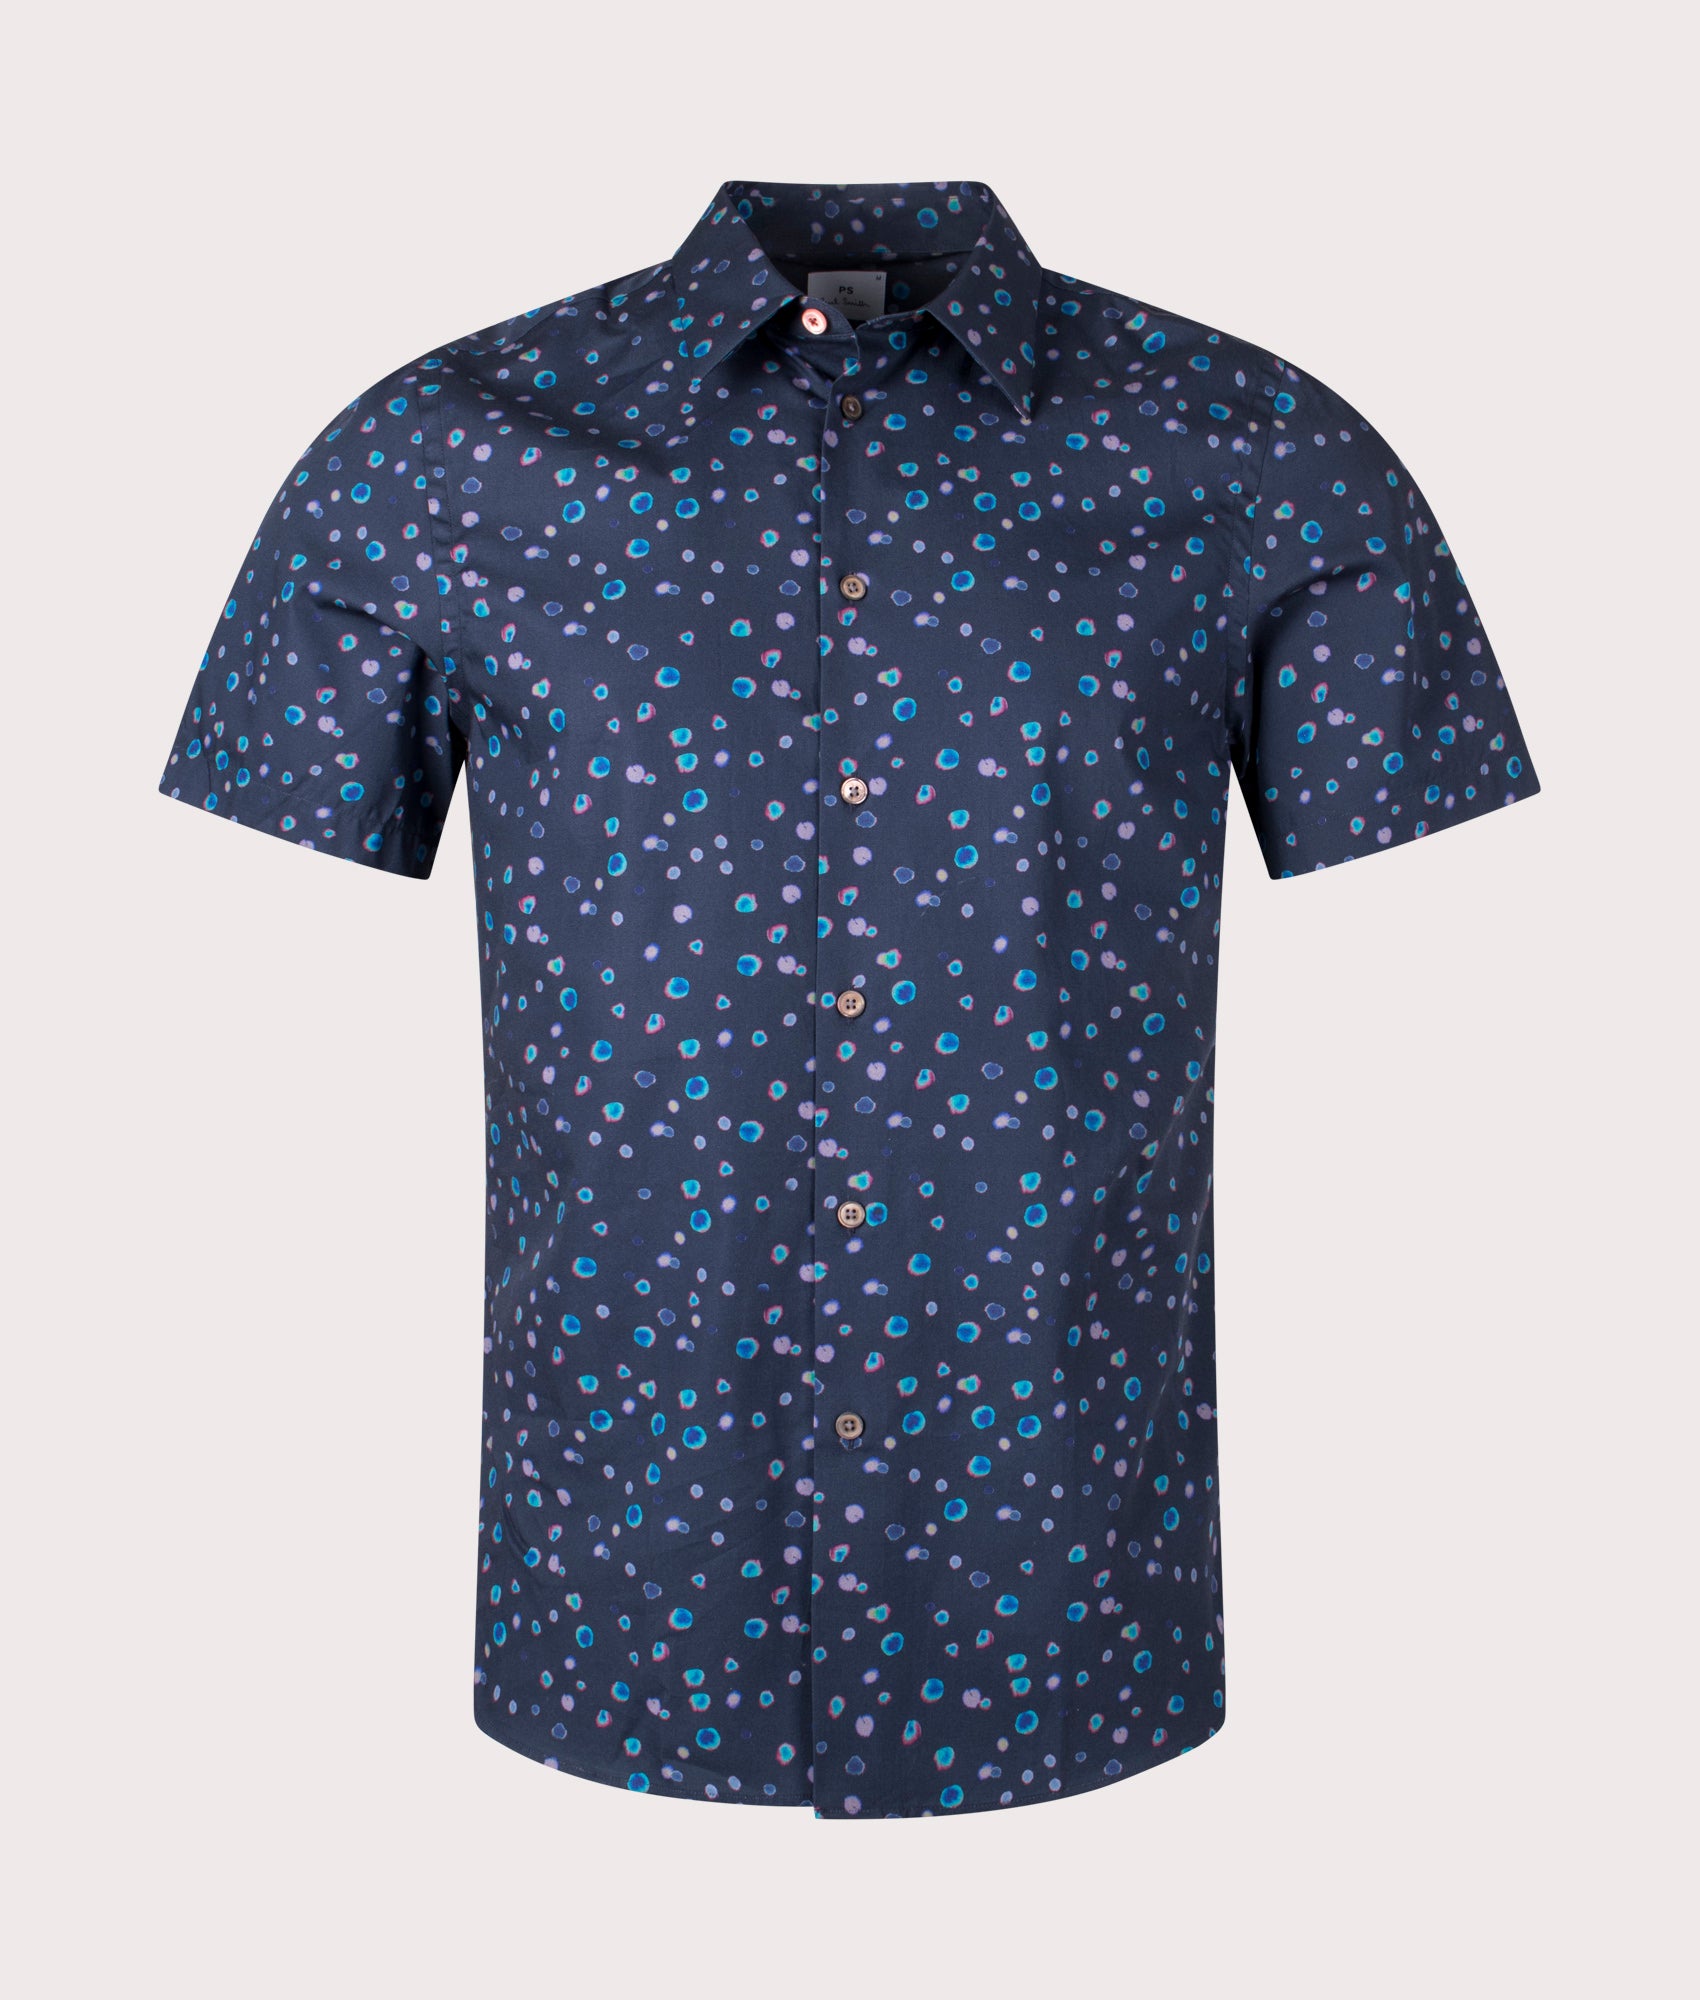 PS Paul Smith Mens Slim Fit Short Sleeve Shirt - Colour: 49 Very Dark Navy - Size: Medium